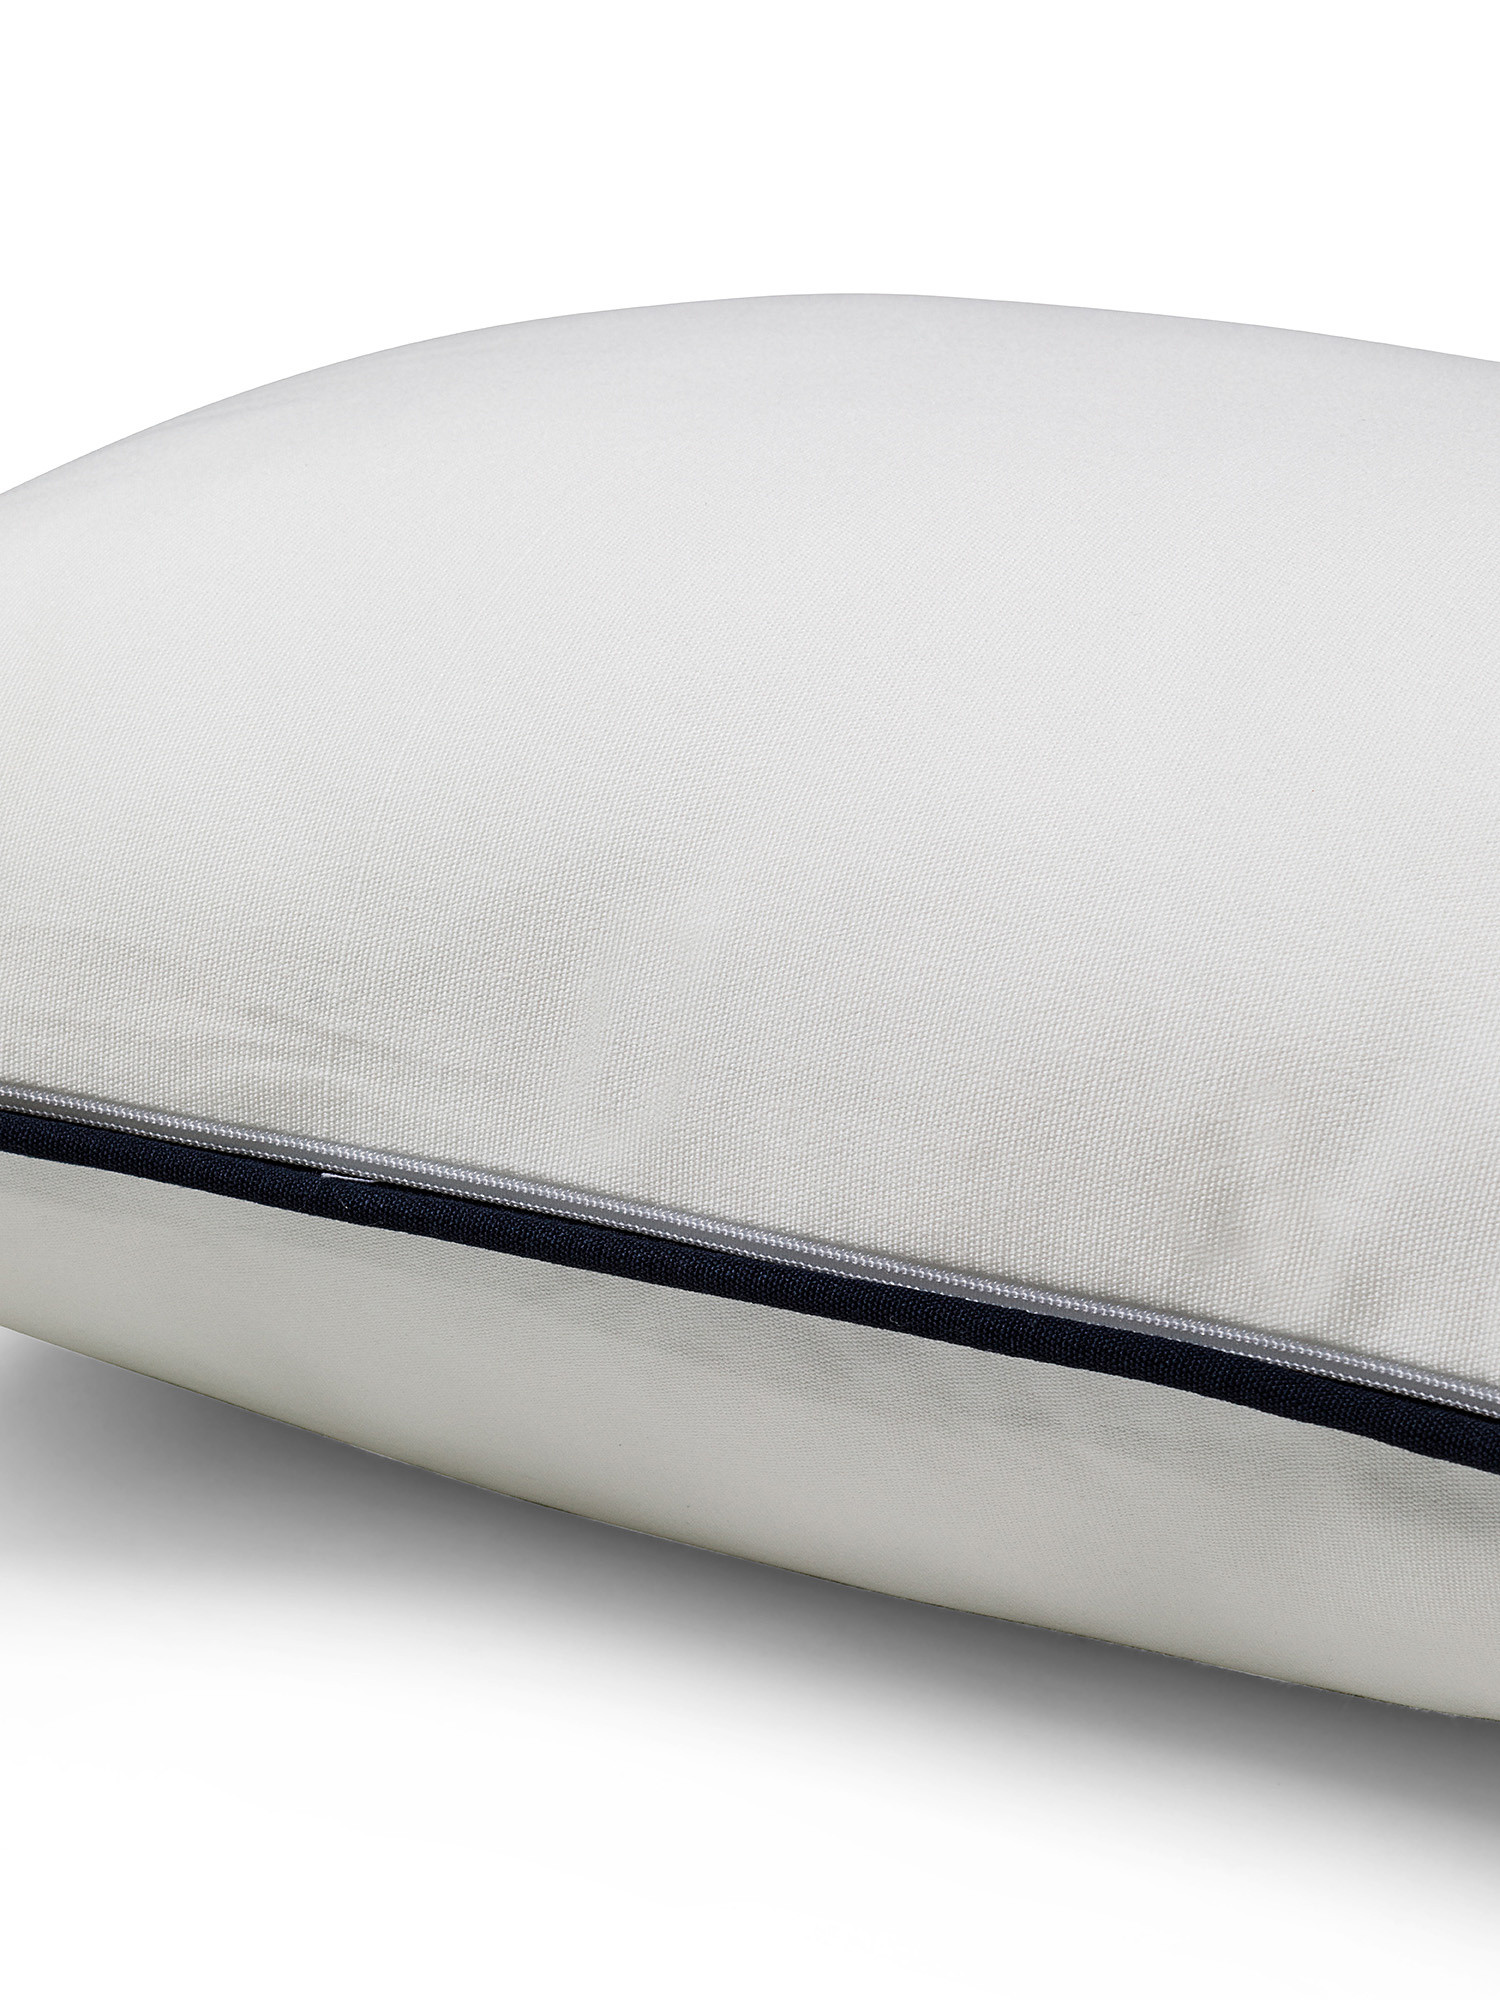 Cuscino da esterno in teflon 30x50cm, Bianco, large image number 2